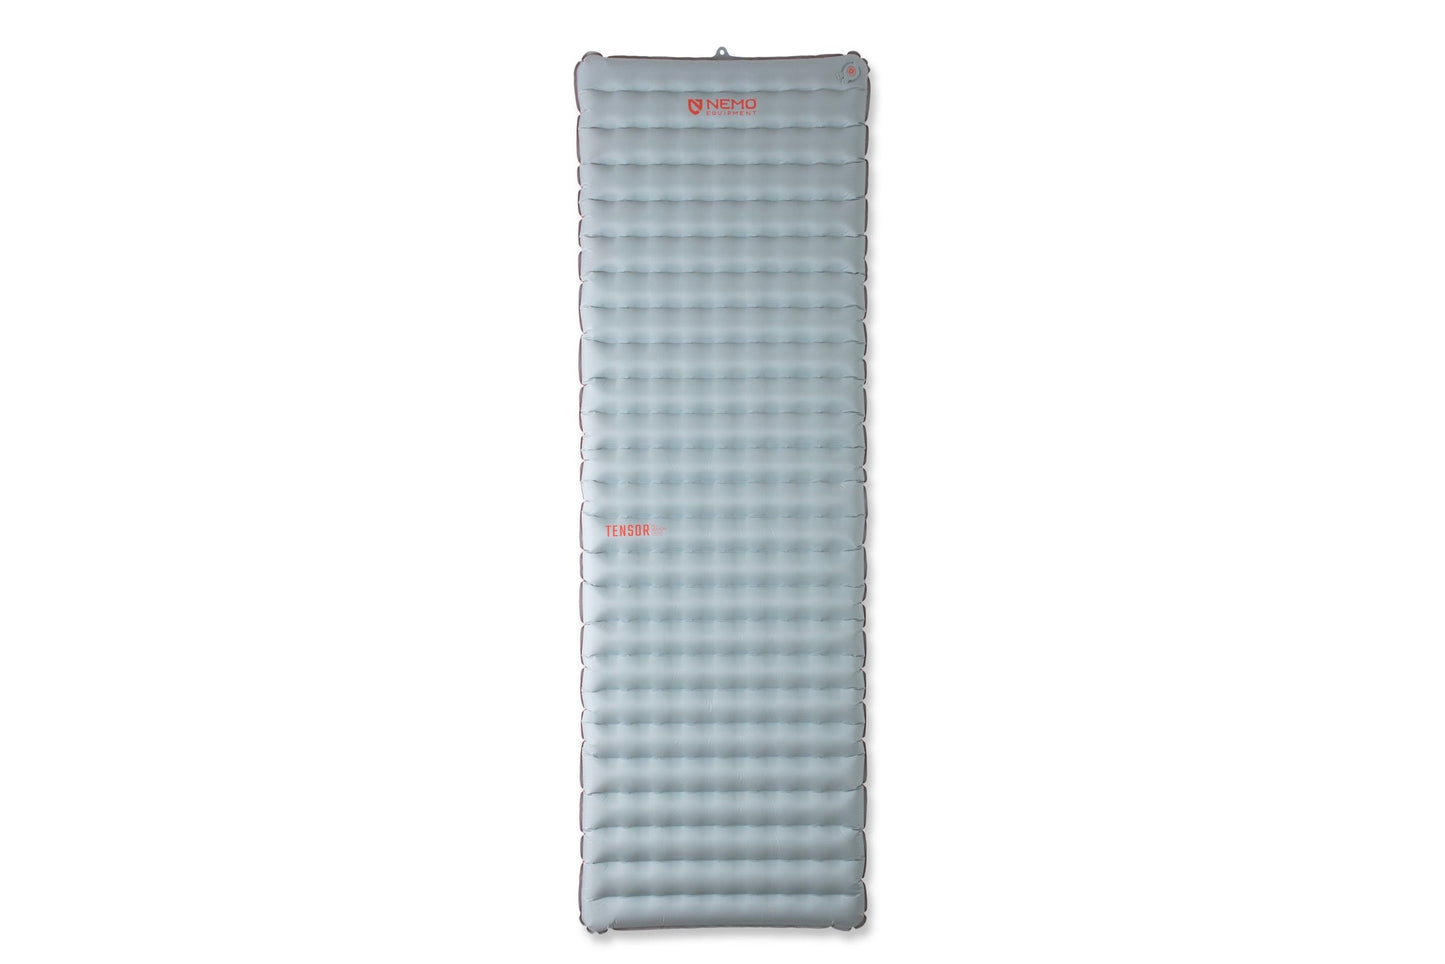 Nemo - Tensor All-Season Ultralight Insulated Sleeping Pad - Regular Wide